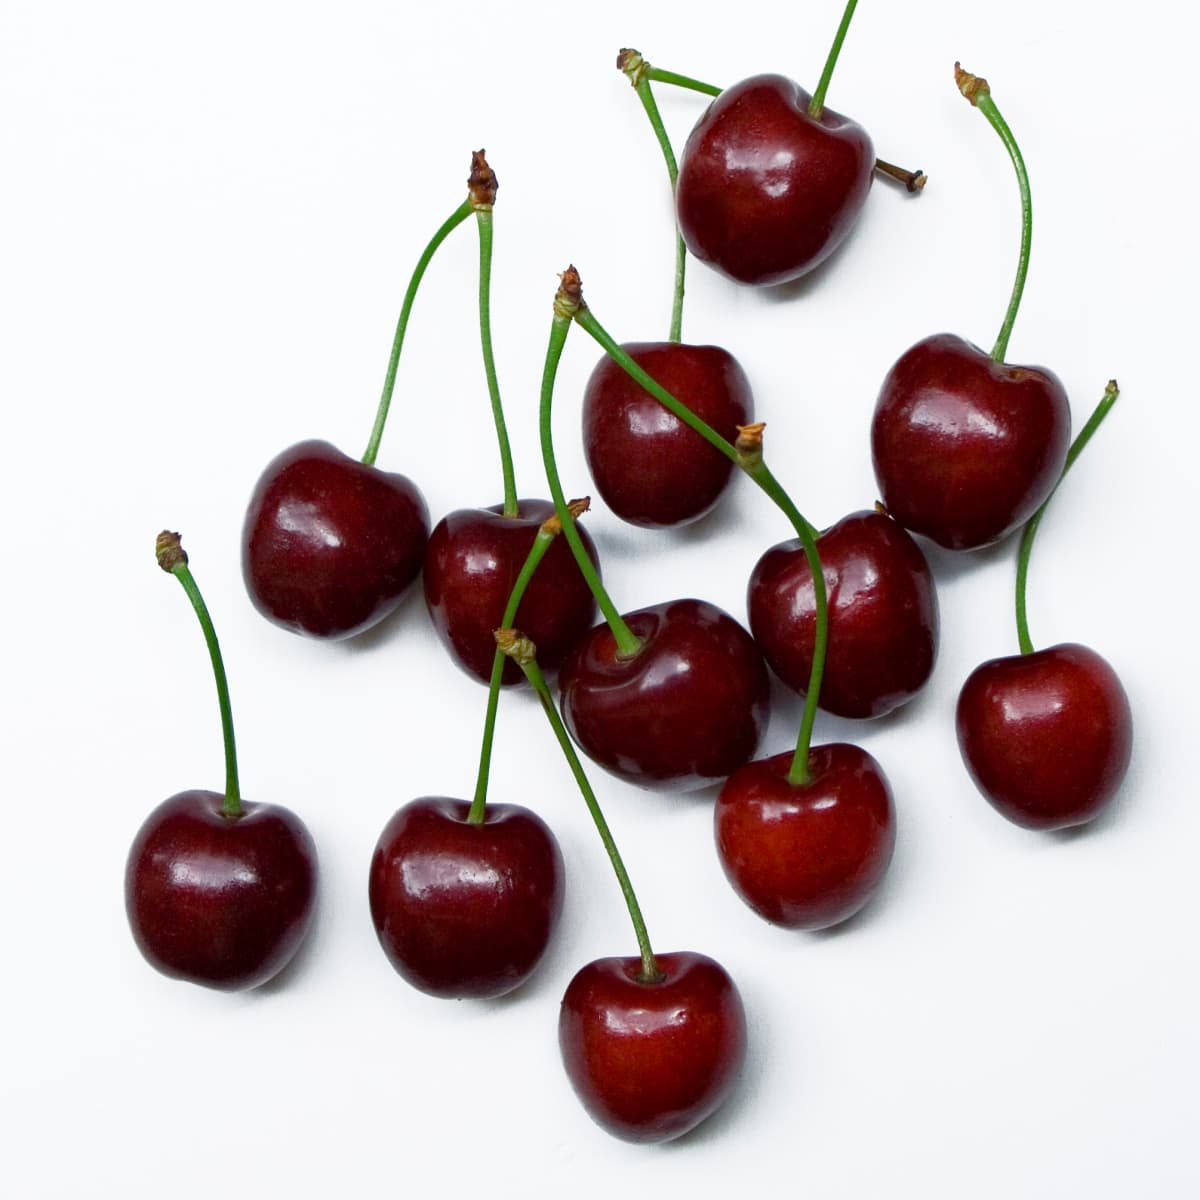 Nutritional and Health Benefits of Cherries and Tart Cherries